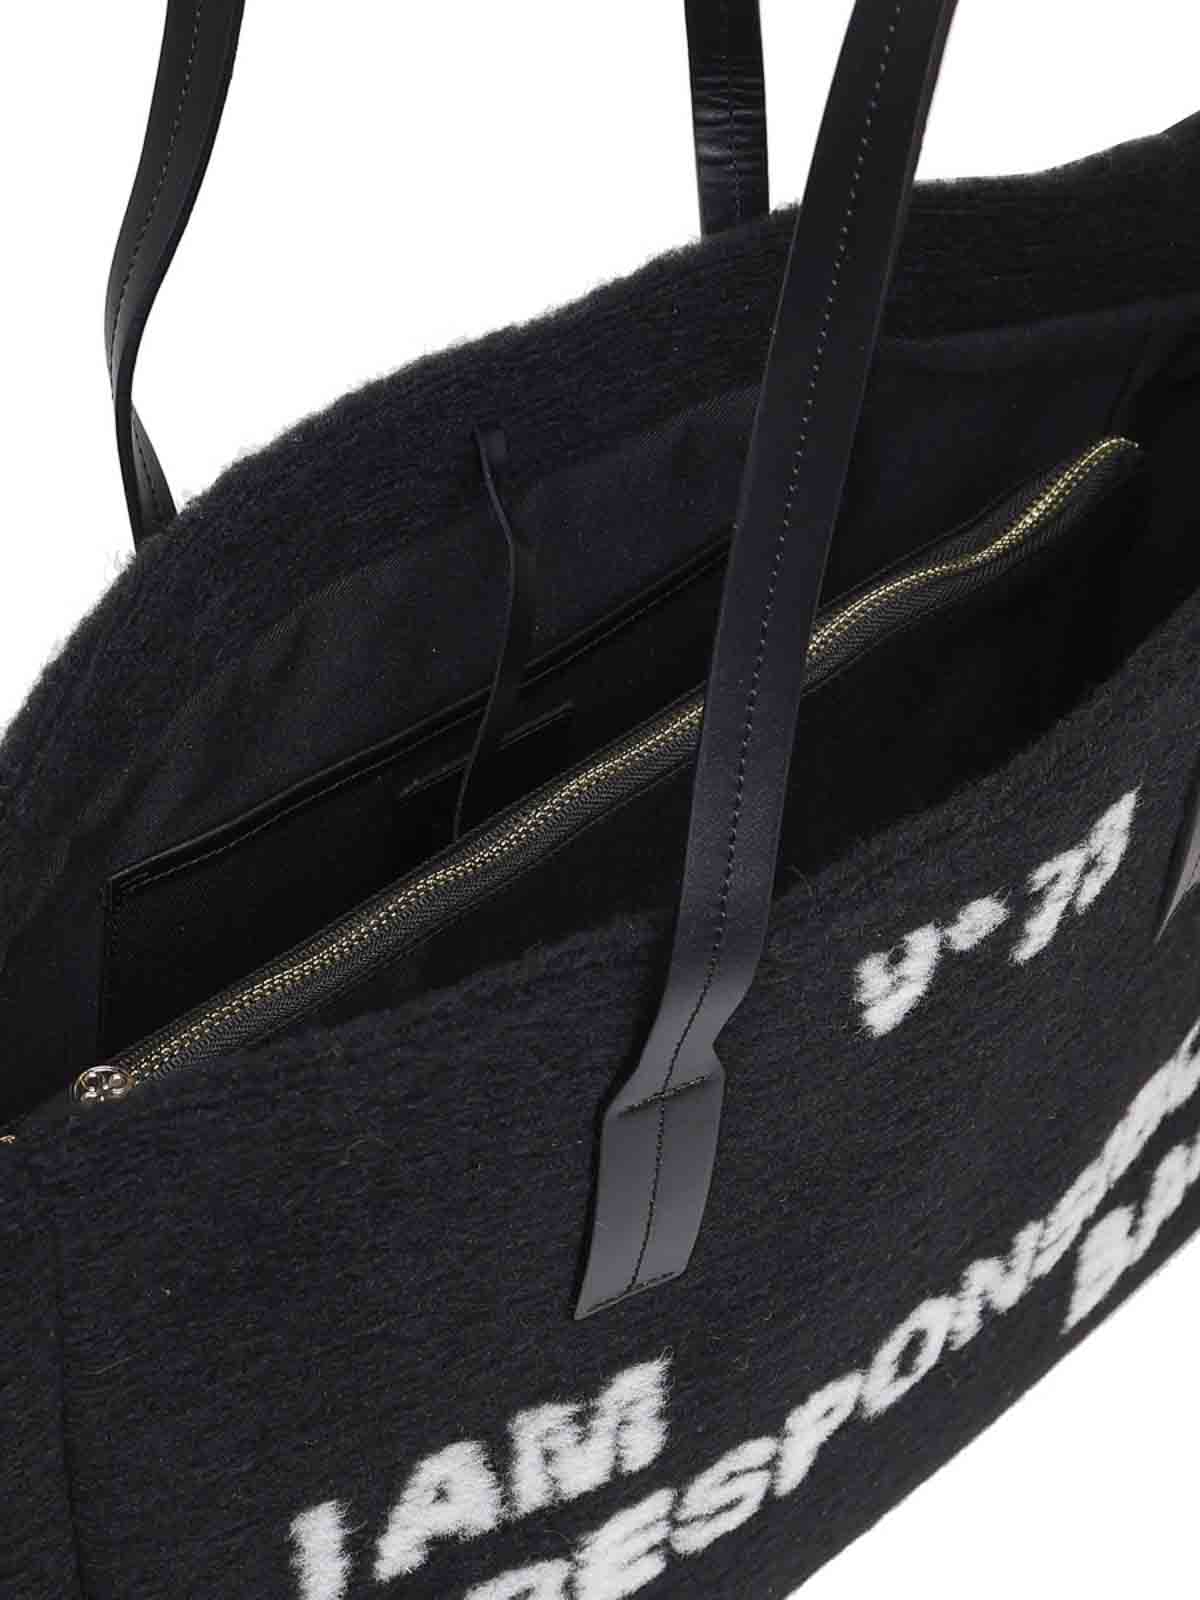 Shop V73 Responsibility Tote Bag In Negro